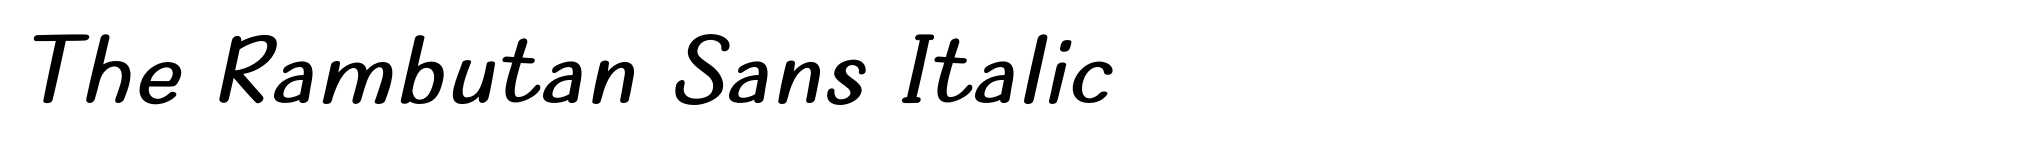 The Rambutan Sans Italic image